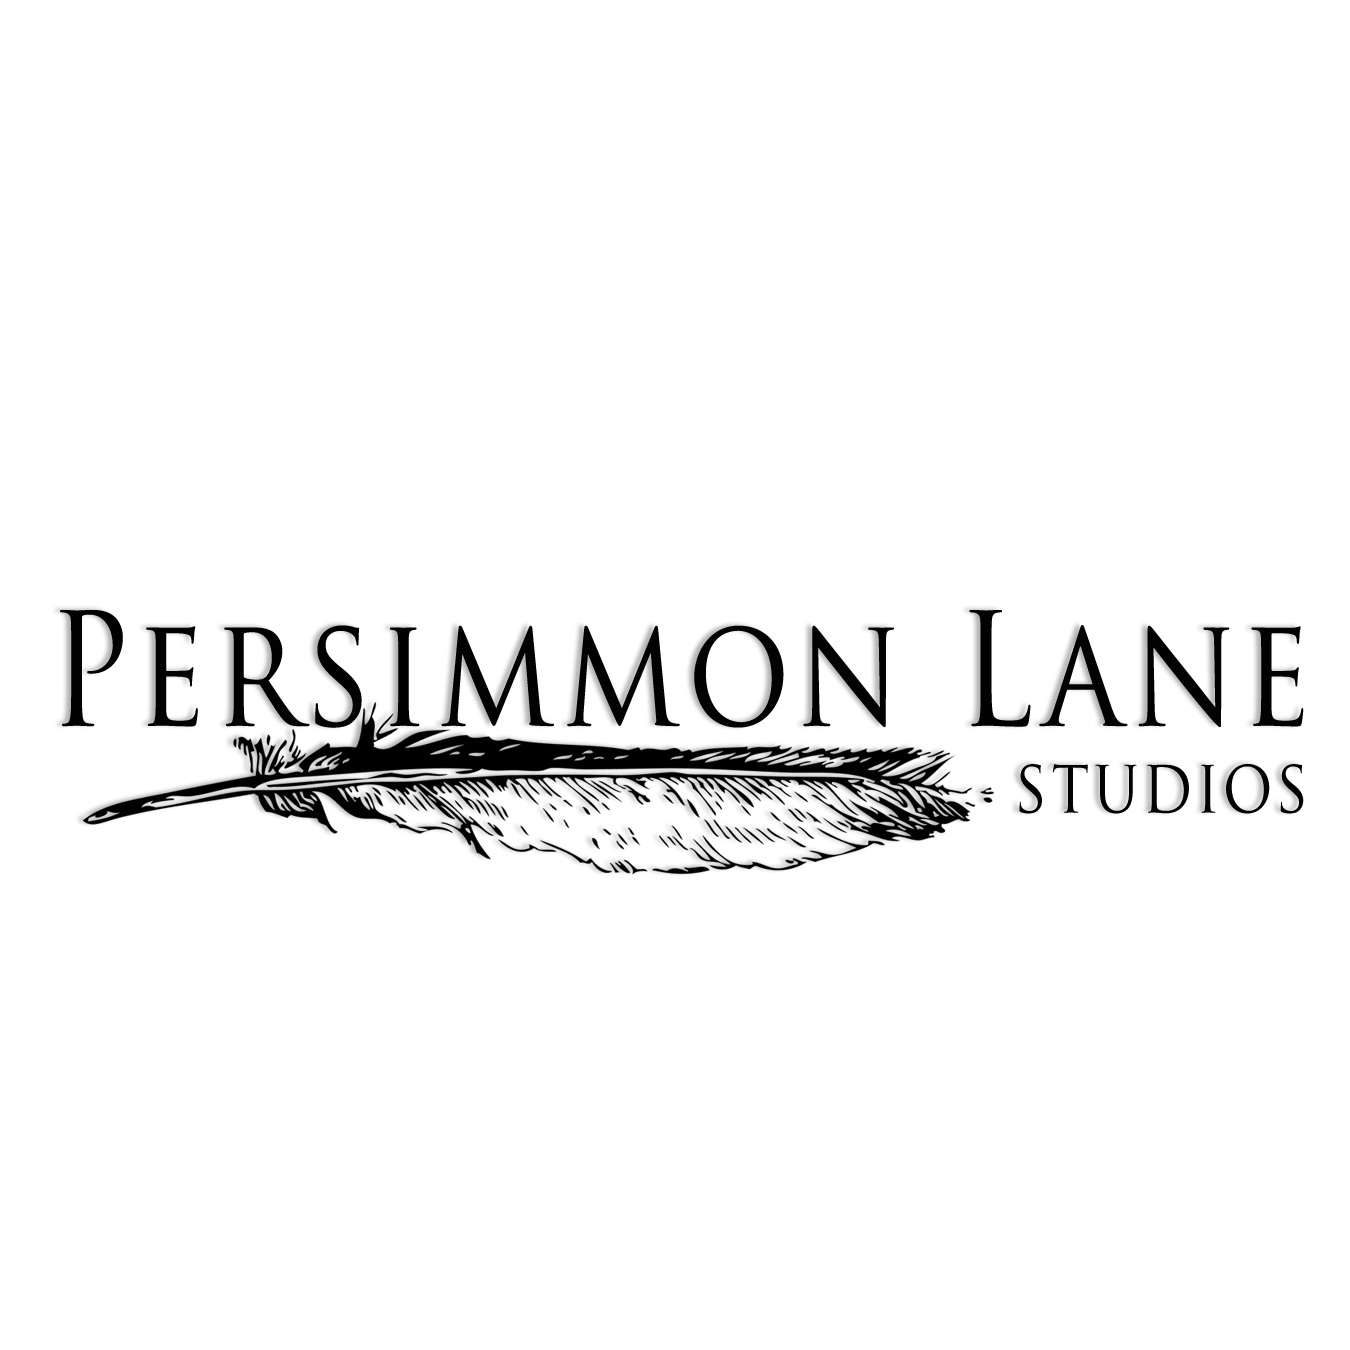 Persimmon Lane Studios